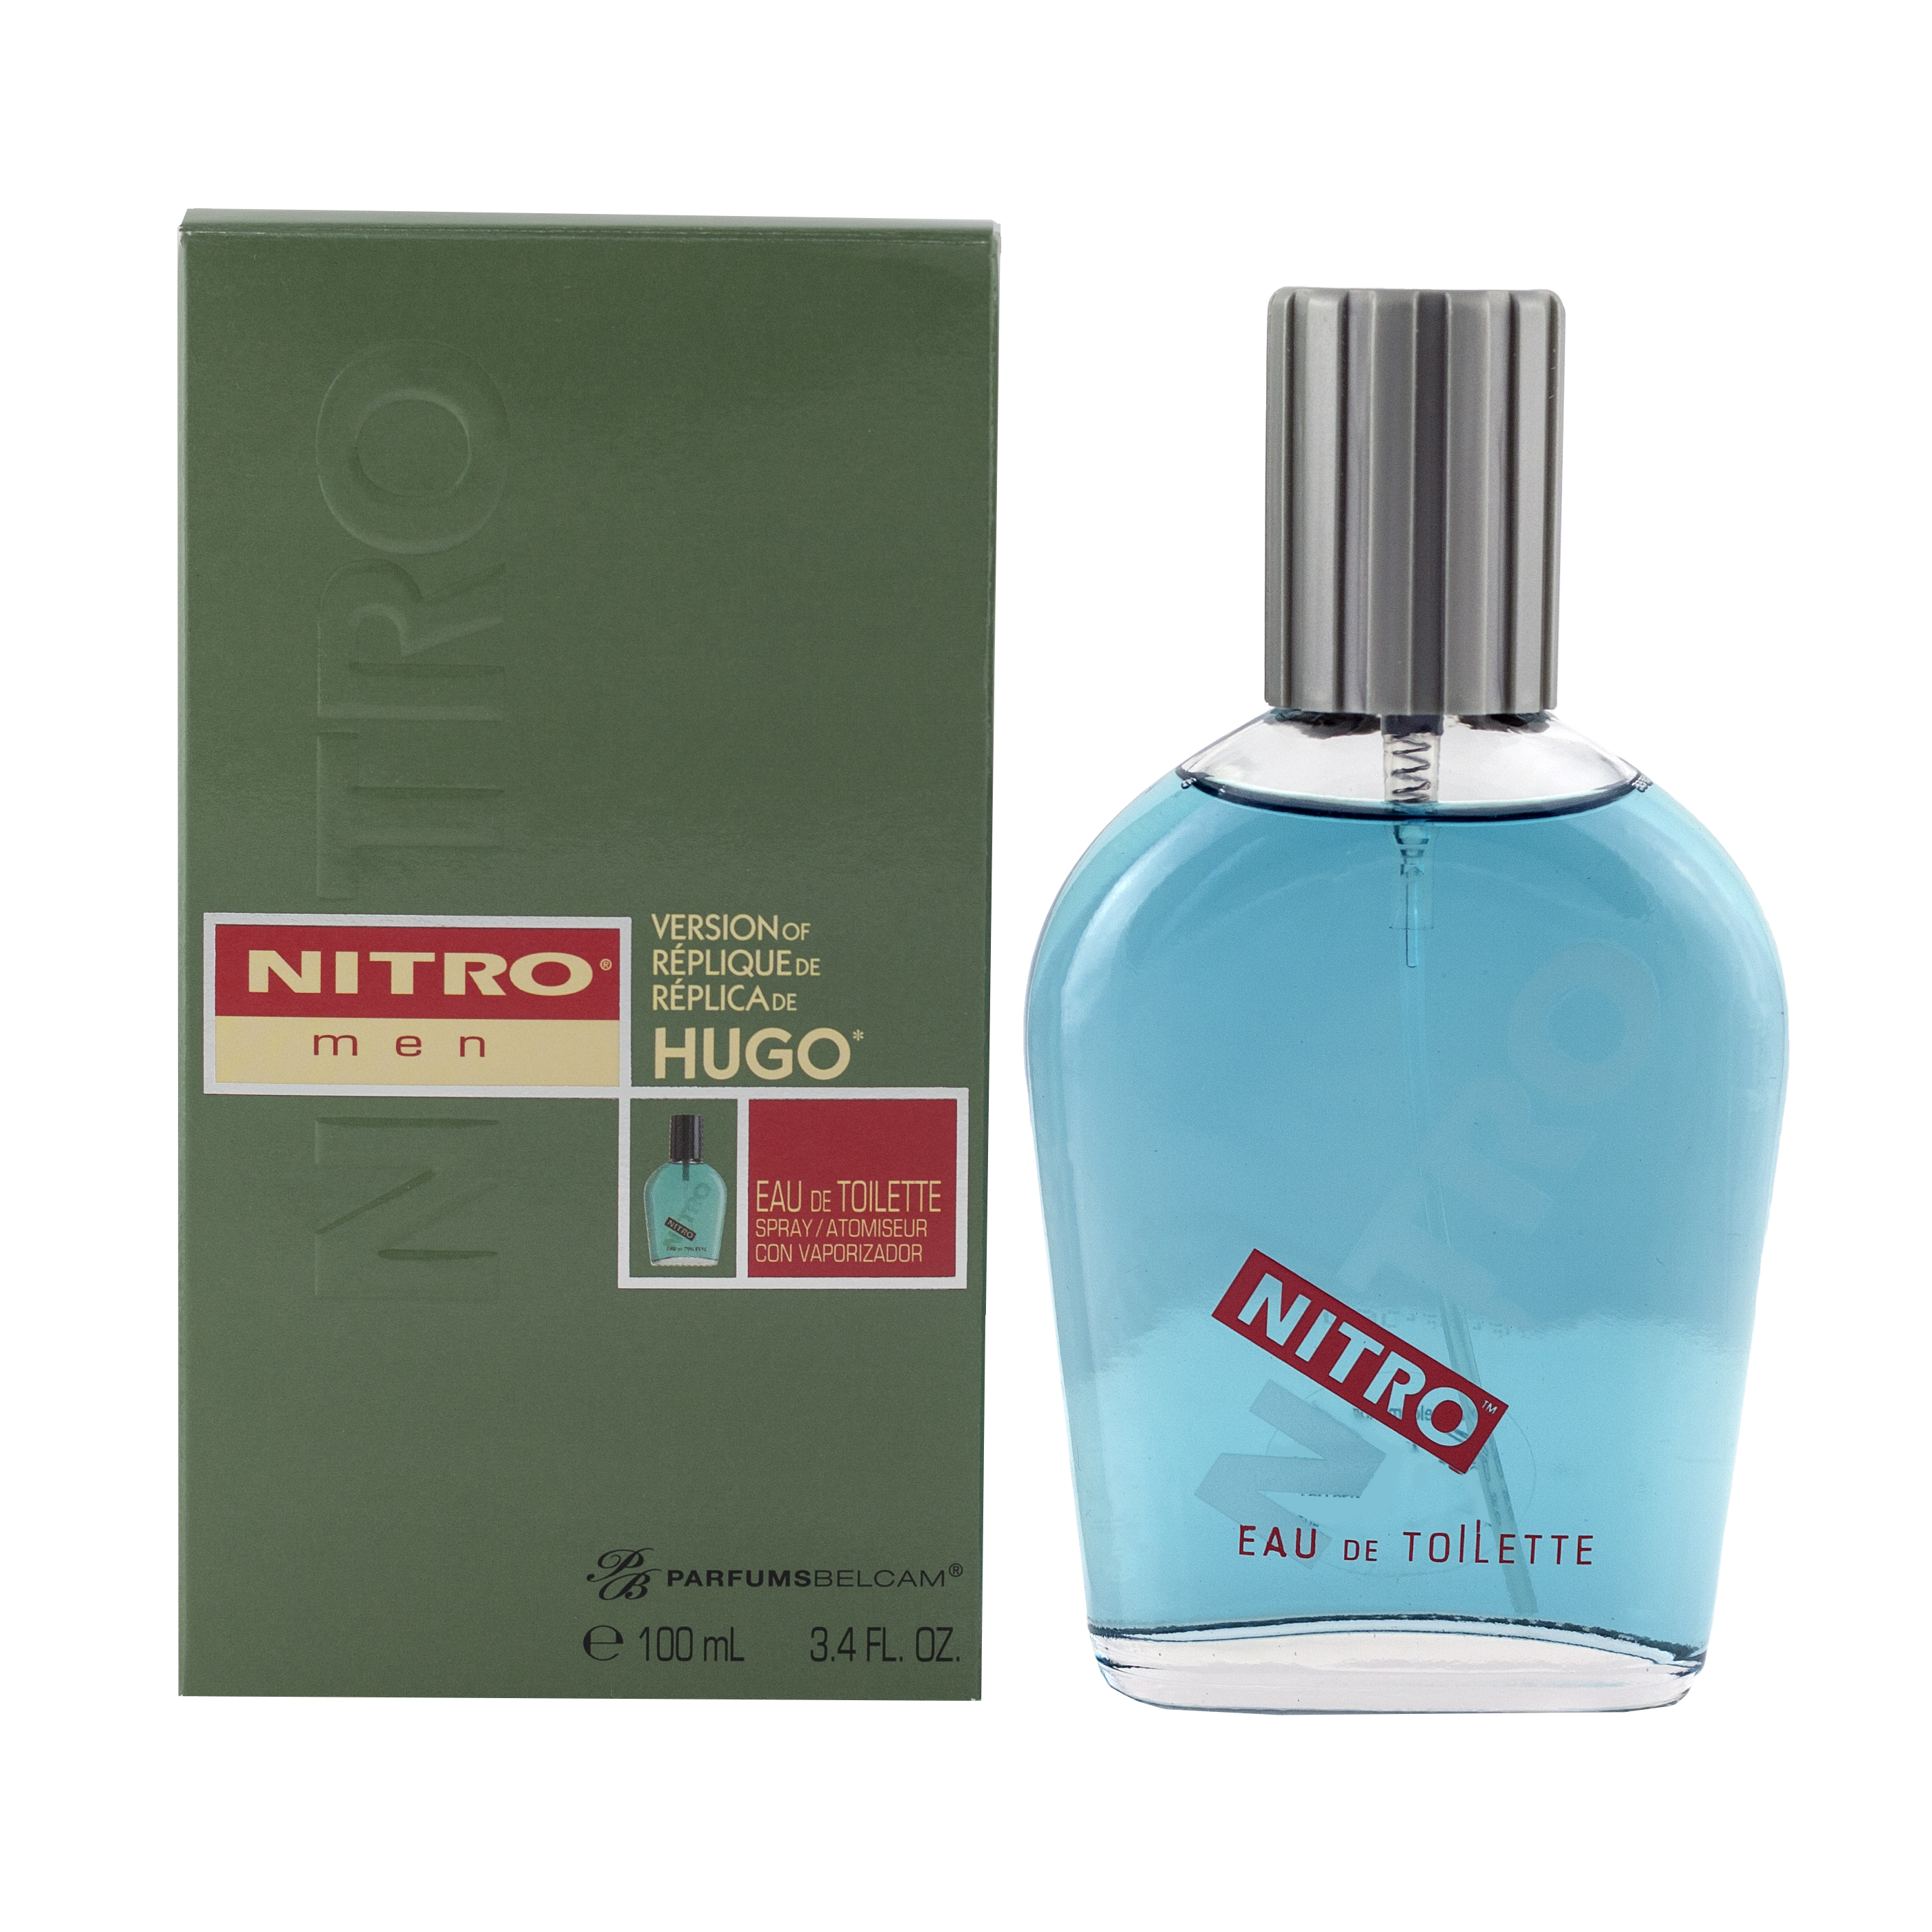 PB ParfumsBelcam Nitro version of Hugo, Eau De Toilette, Cologne for Men, 3.4 Fl oz - image 2 of 7